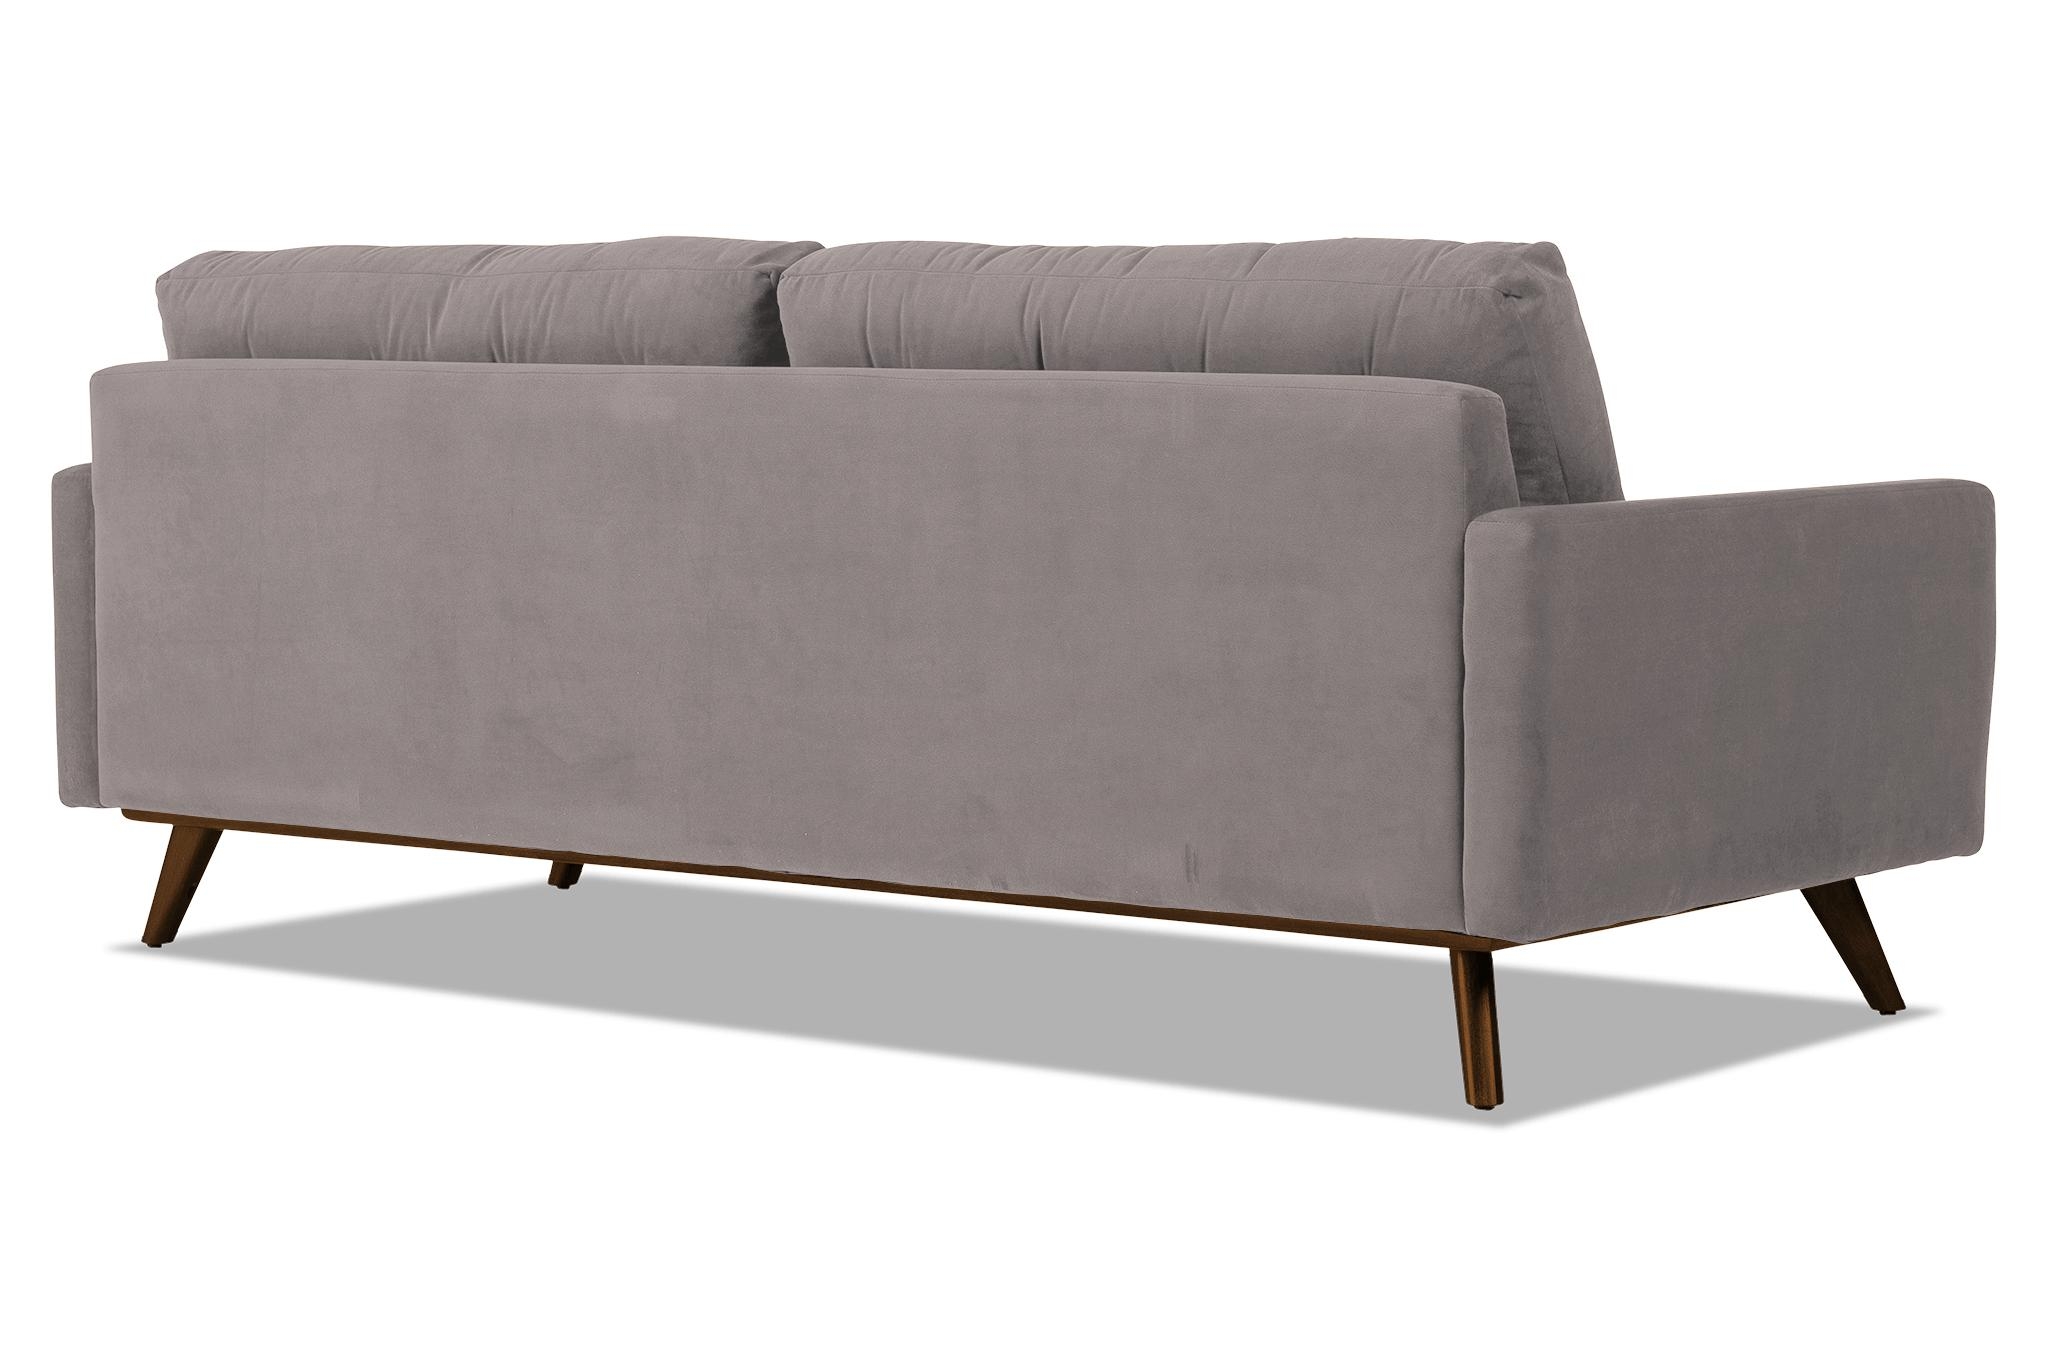 Purple Hopson Mid Century Modern Sofa - Sunbrella Premier Wisteria - Mocha - Image 3